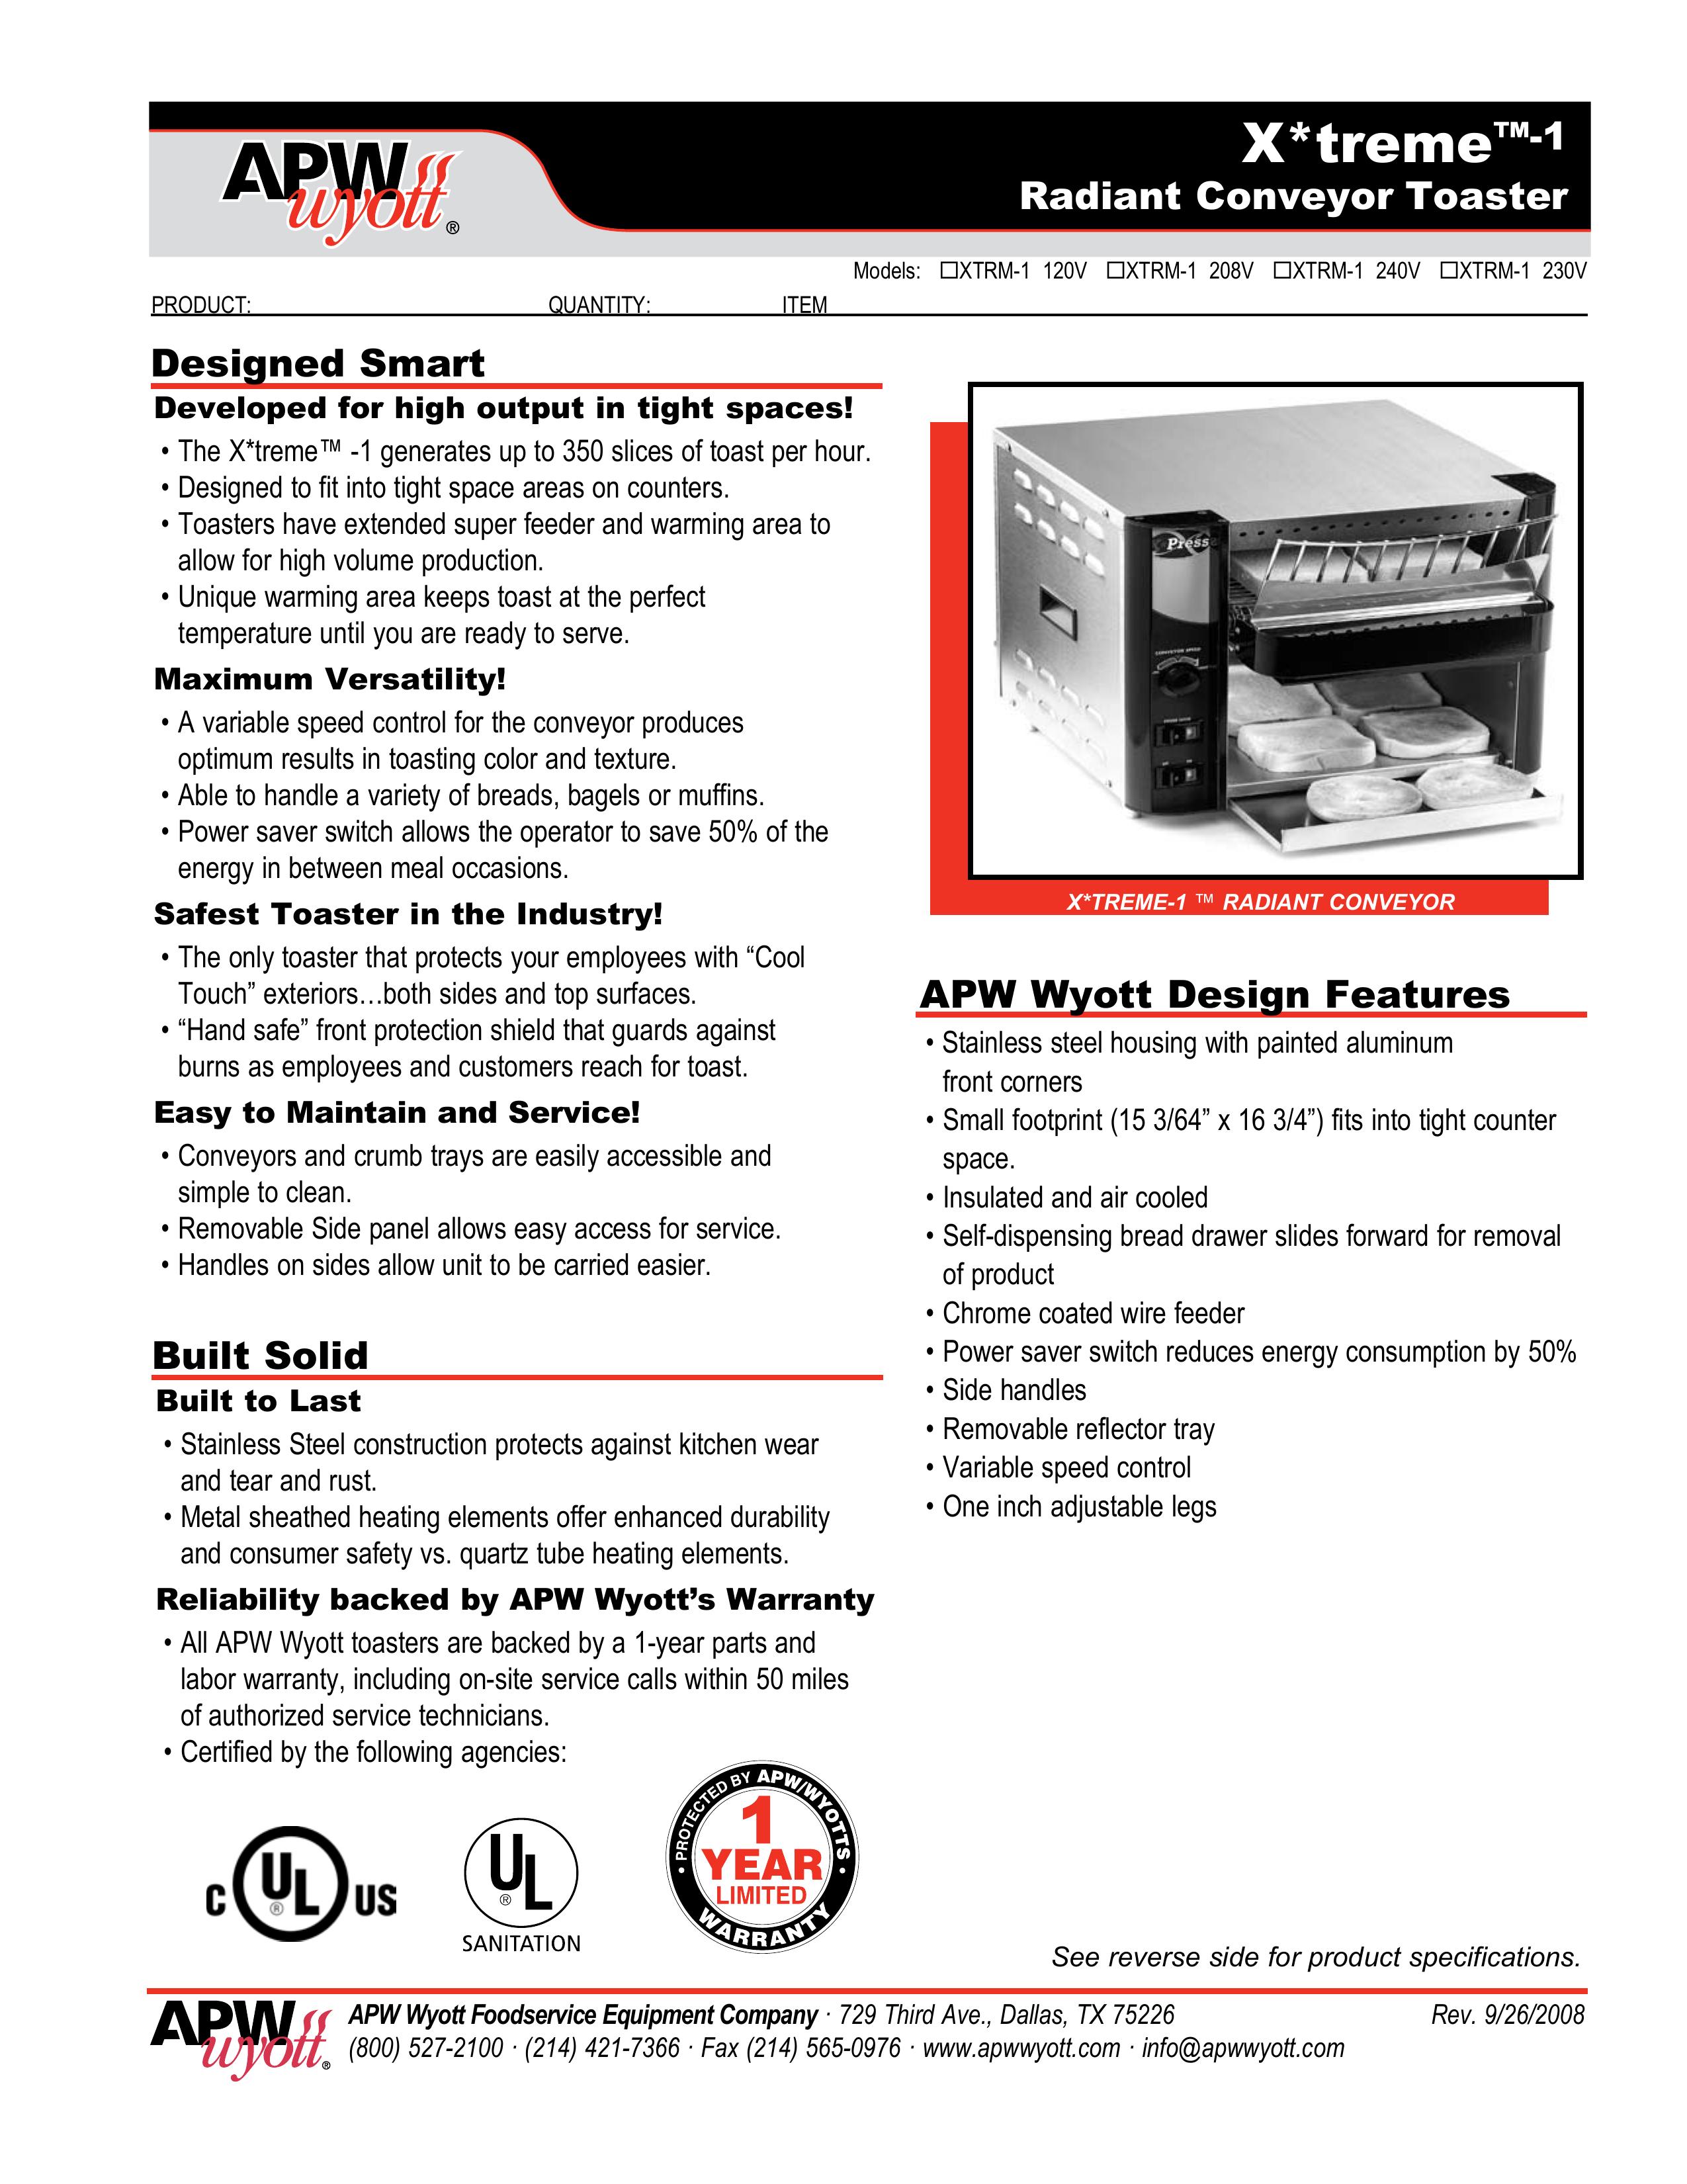 APW Wyott XTRM-1 230V Toaster User Manual